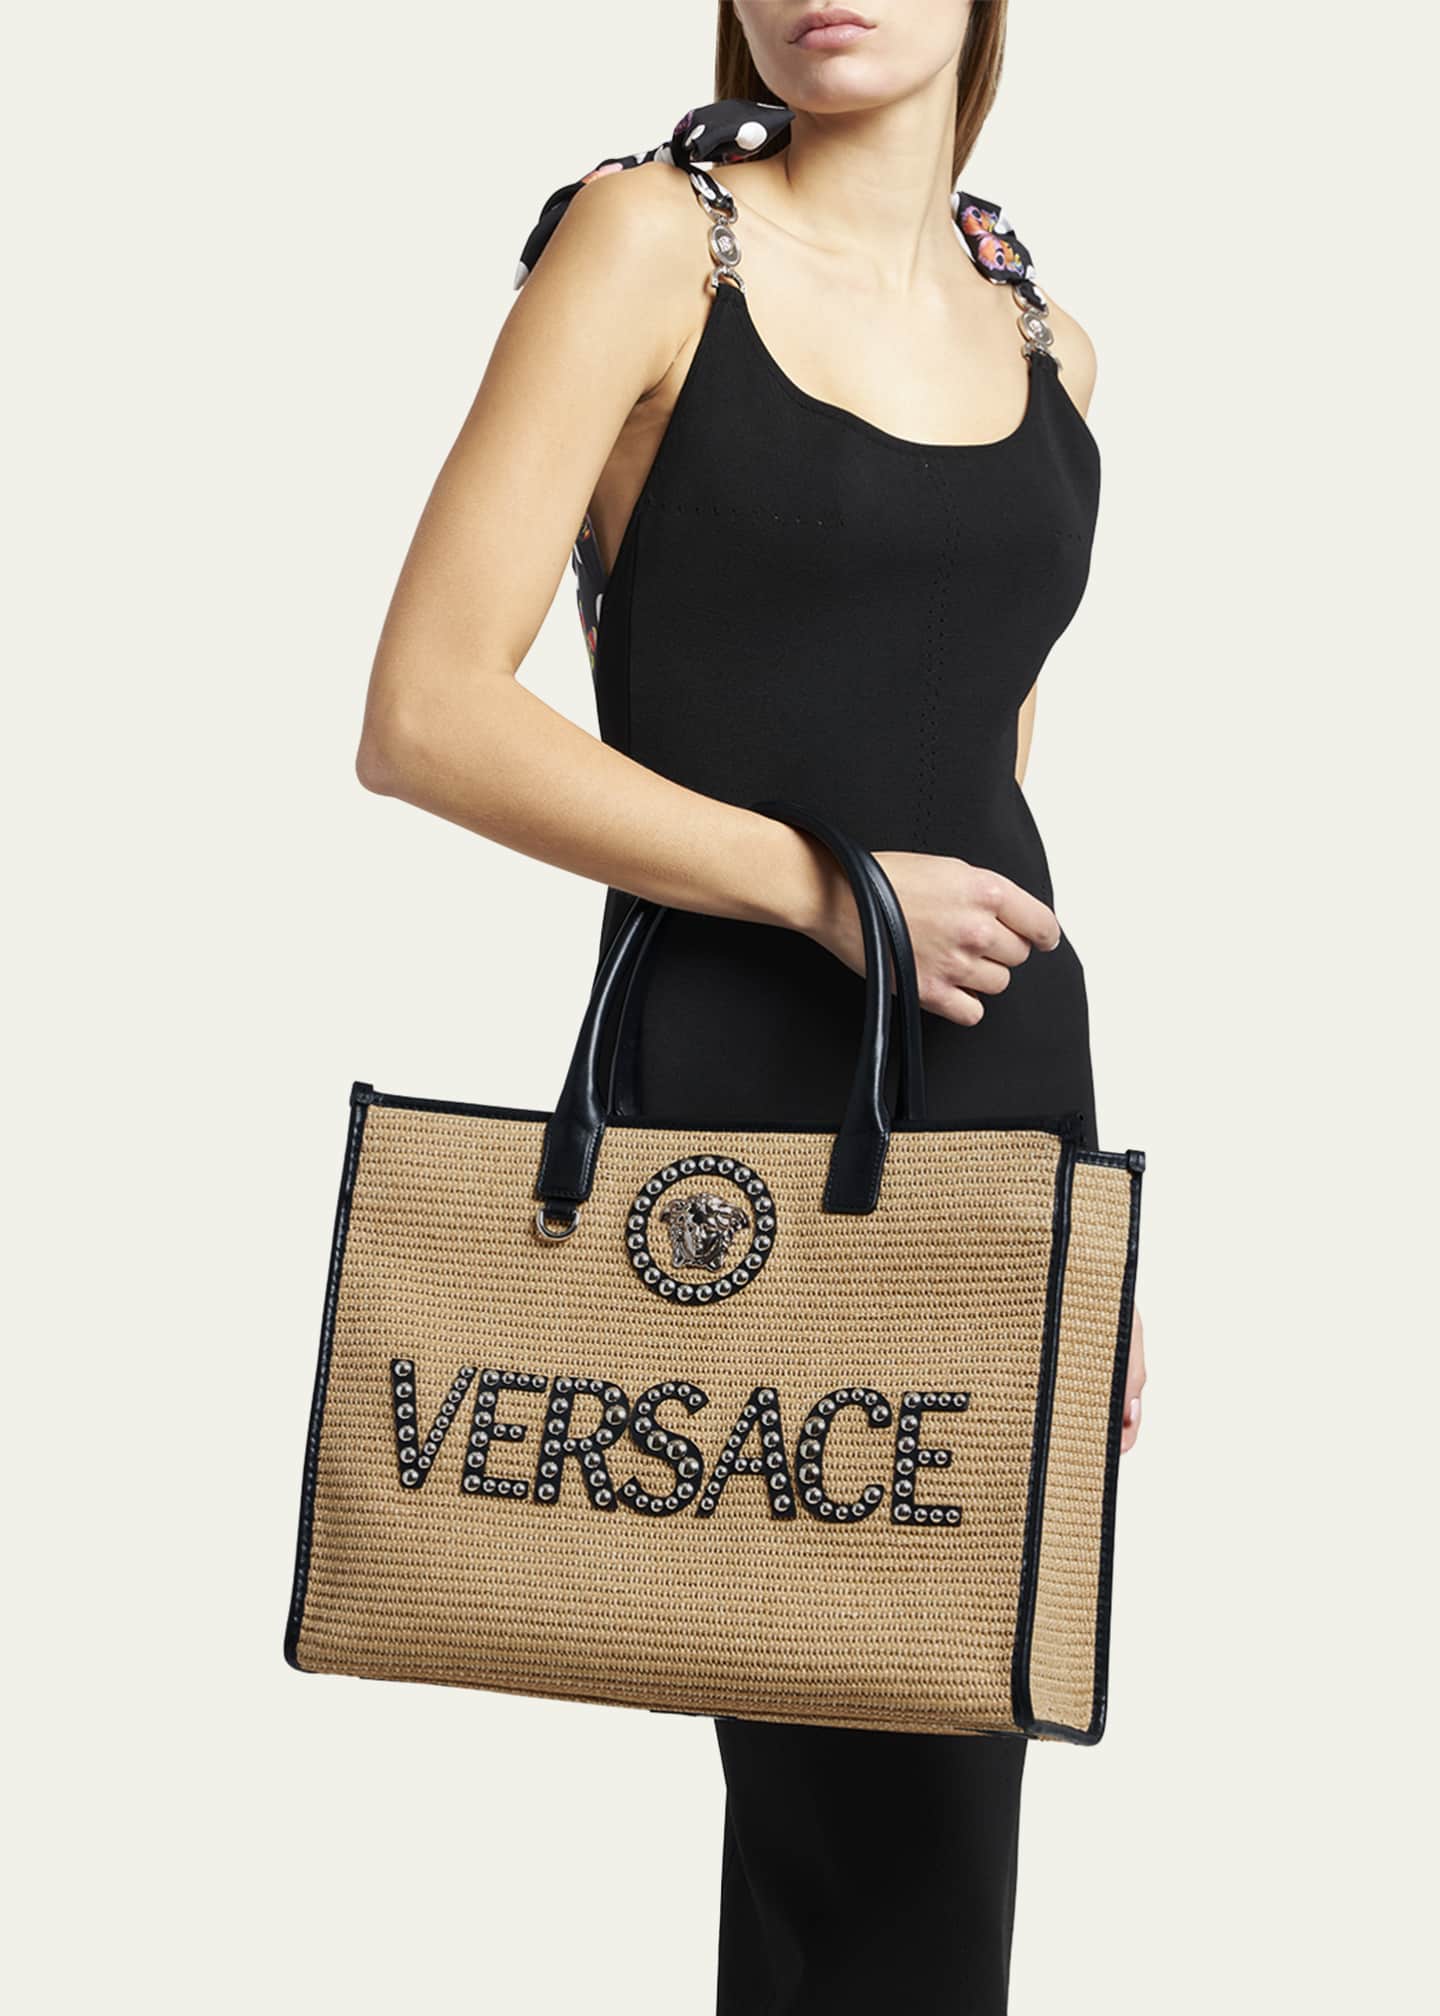 Versace La Medusa Large Tote Bag for Women